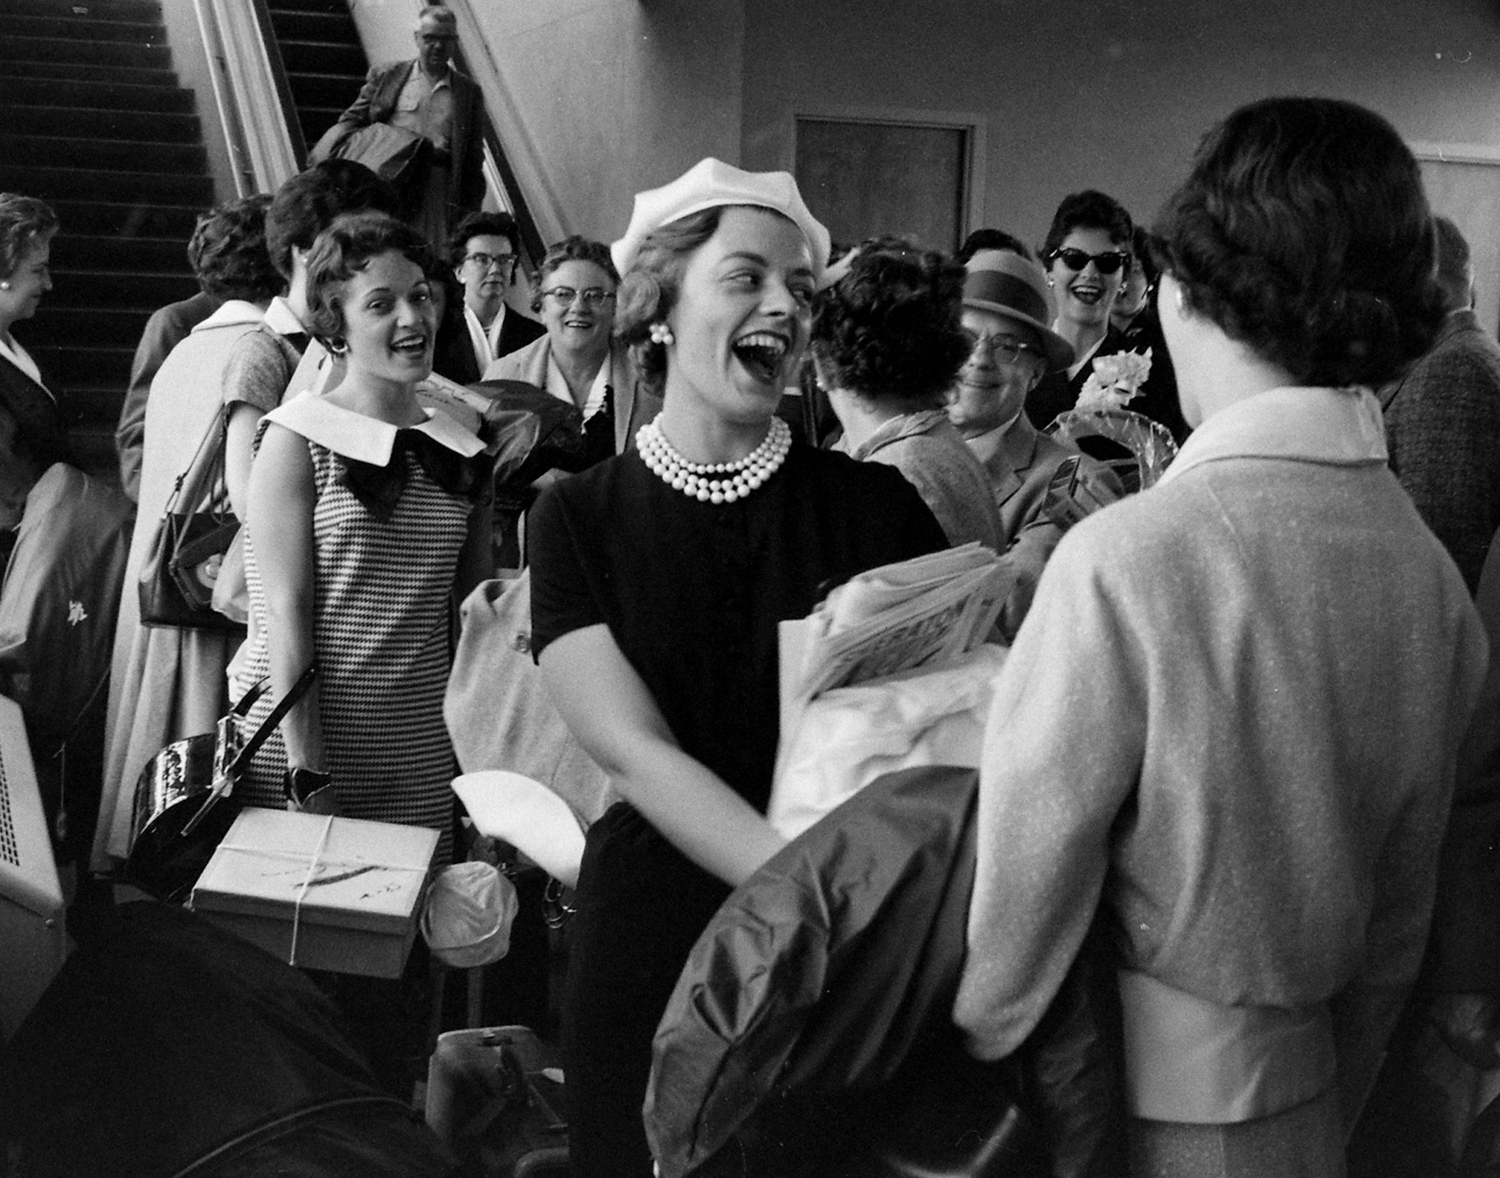 Farewell for newly graduated stewardesses, Ft. Worth, Texas, 1958.